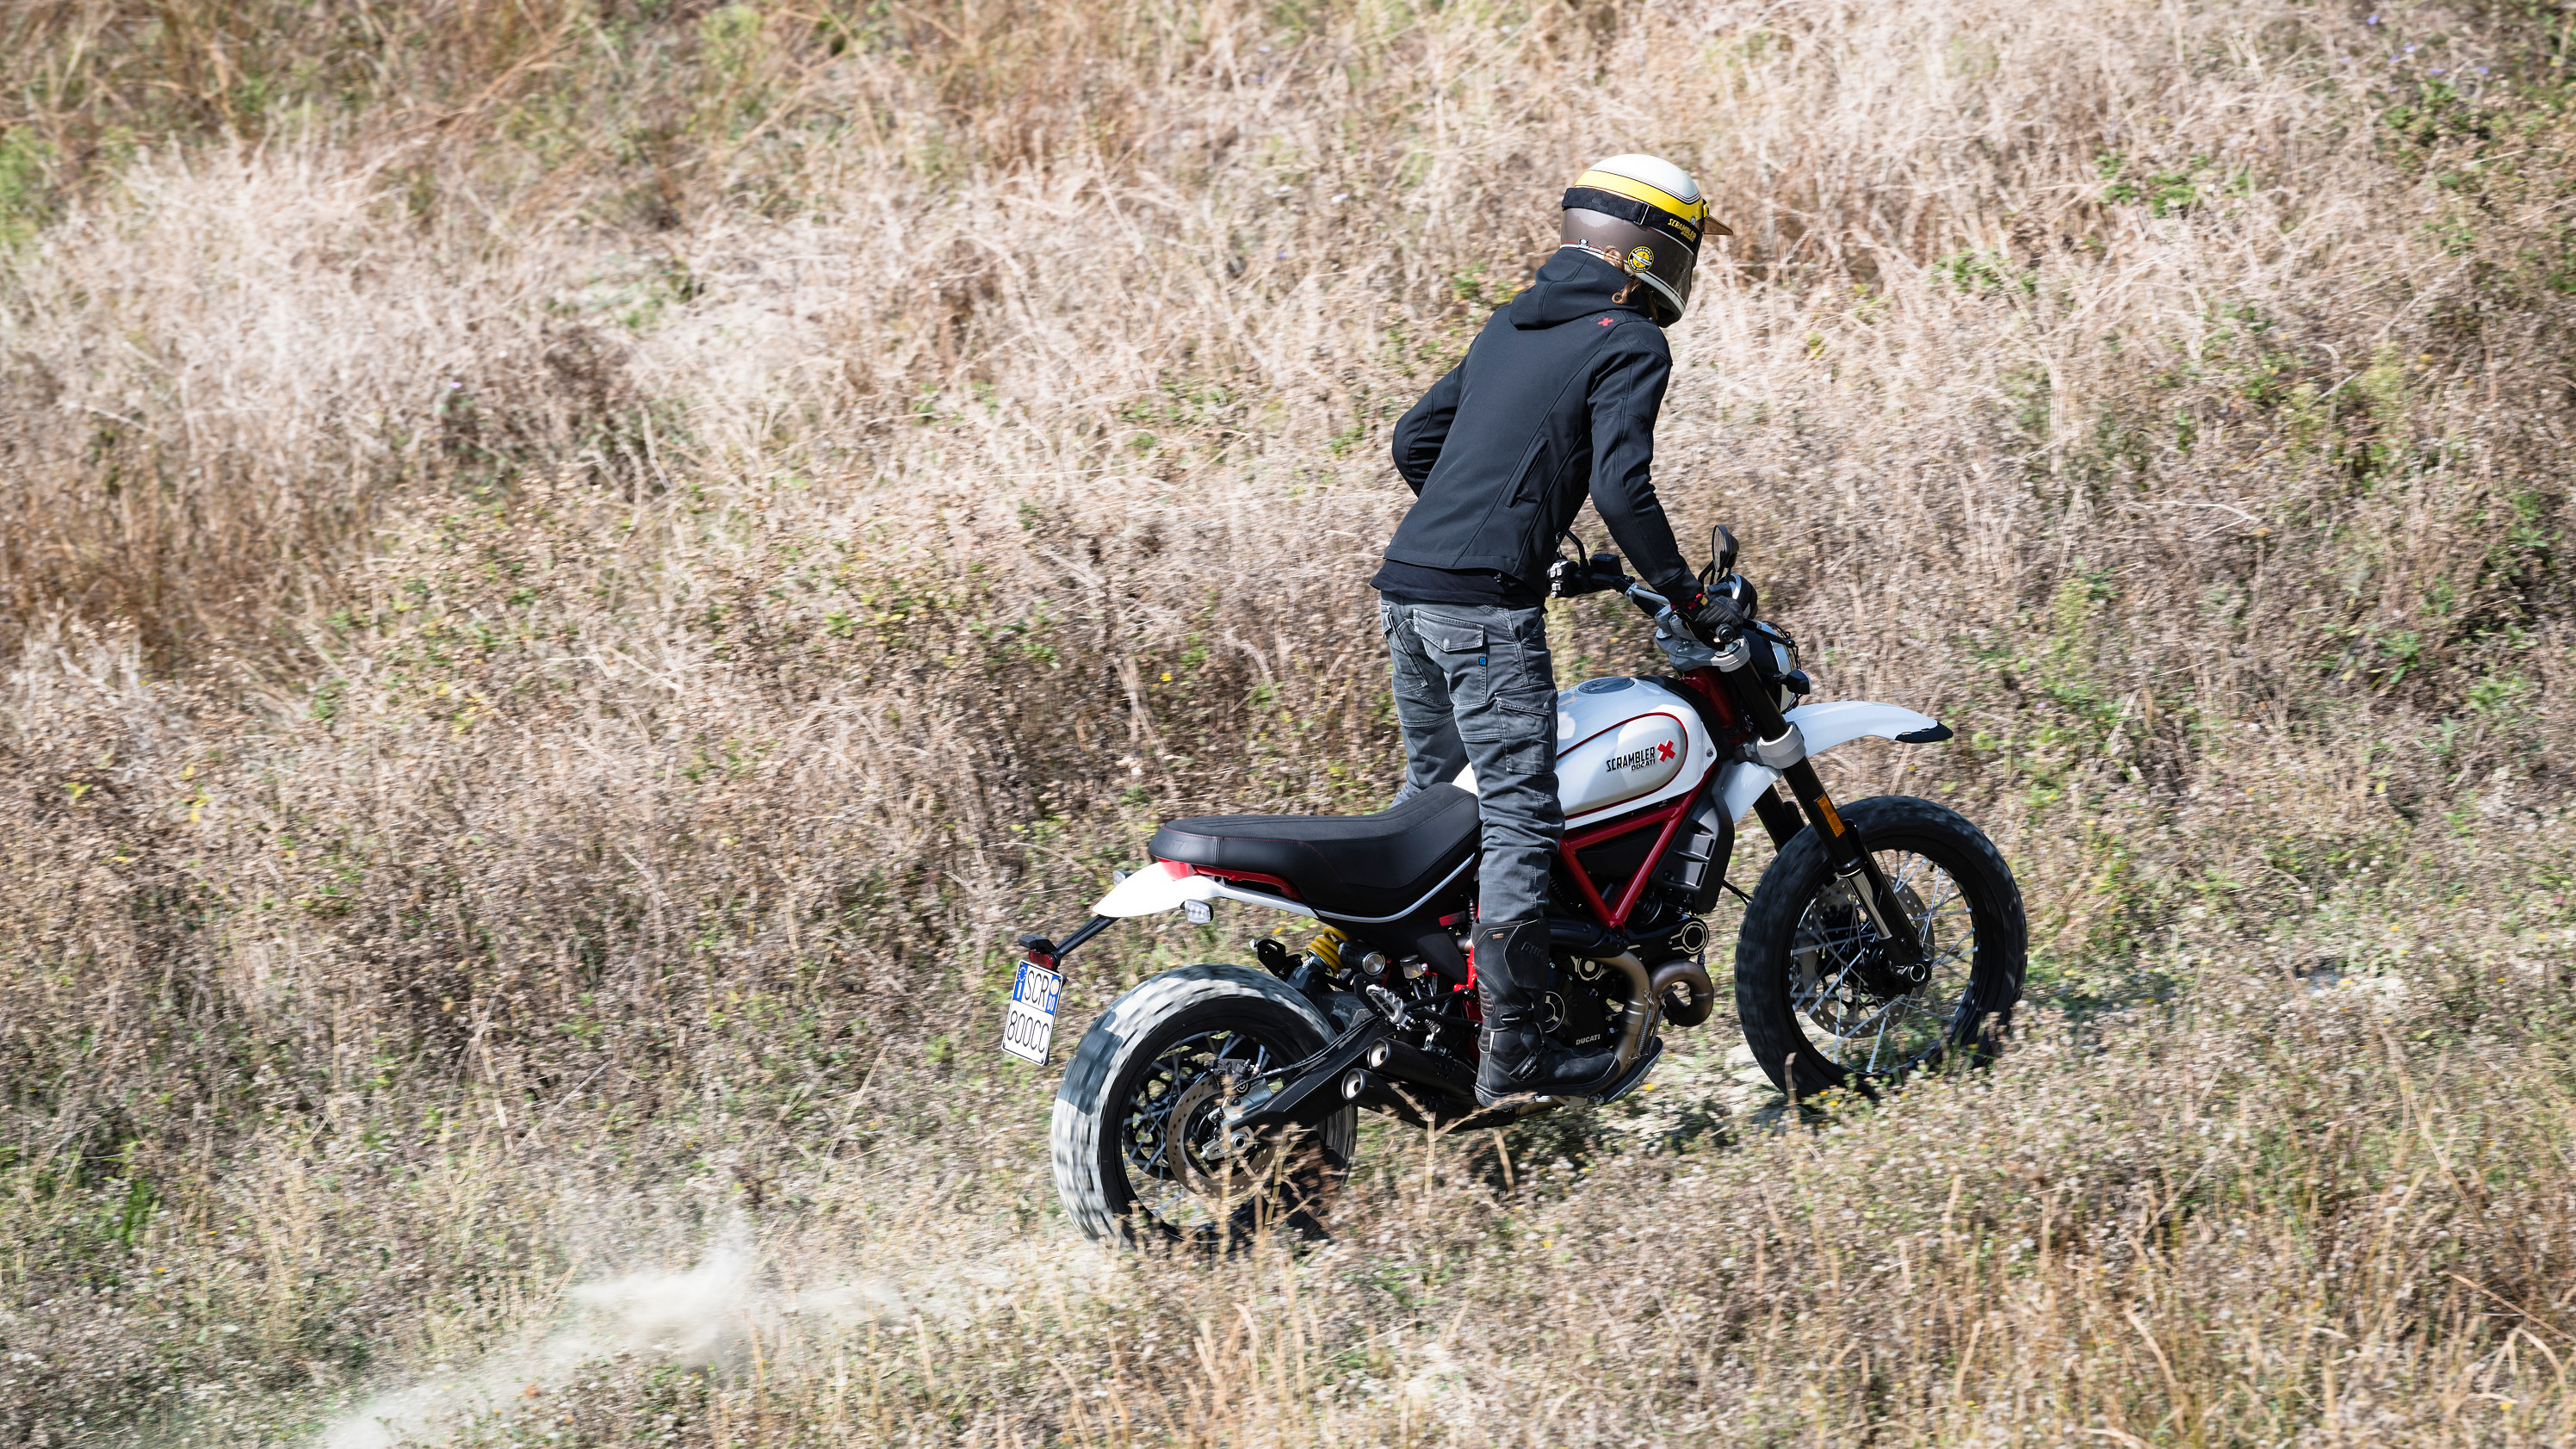 2019 Ducati Scrambler Desert Sled Pictures, Photos, - Ducati Scrambler Desert Sled 2019 , HD Wallpaper & Backgrounds